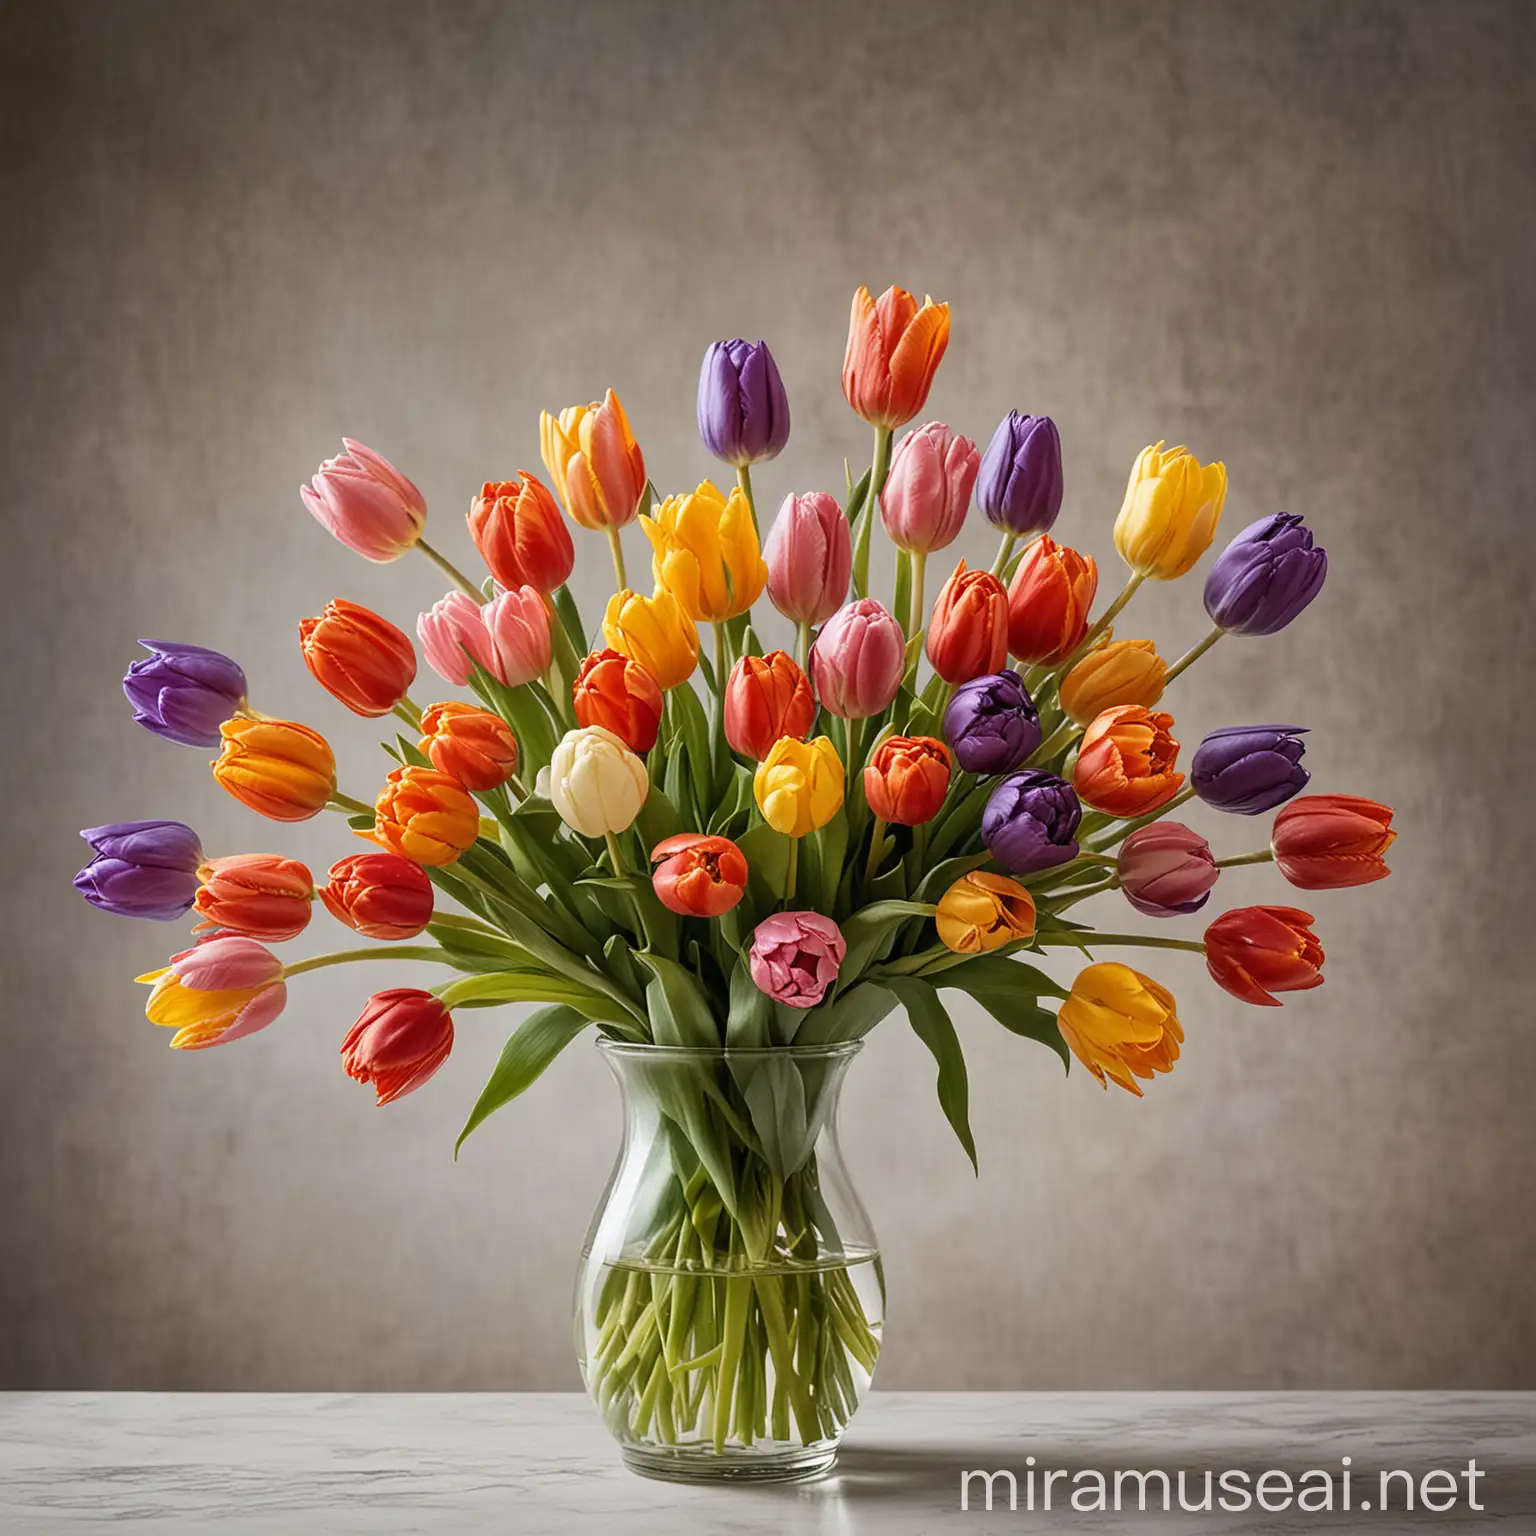 Colorful Tulips Arrangement in a Vibrant Vase